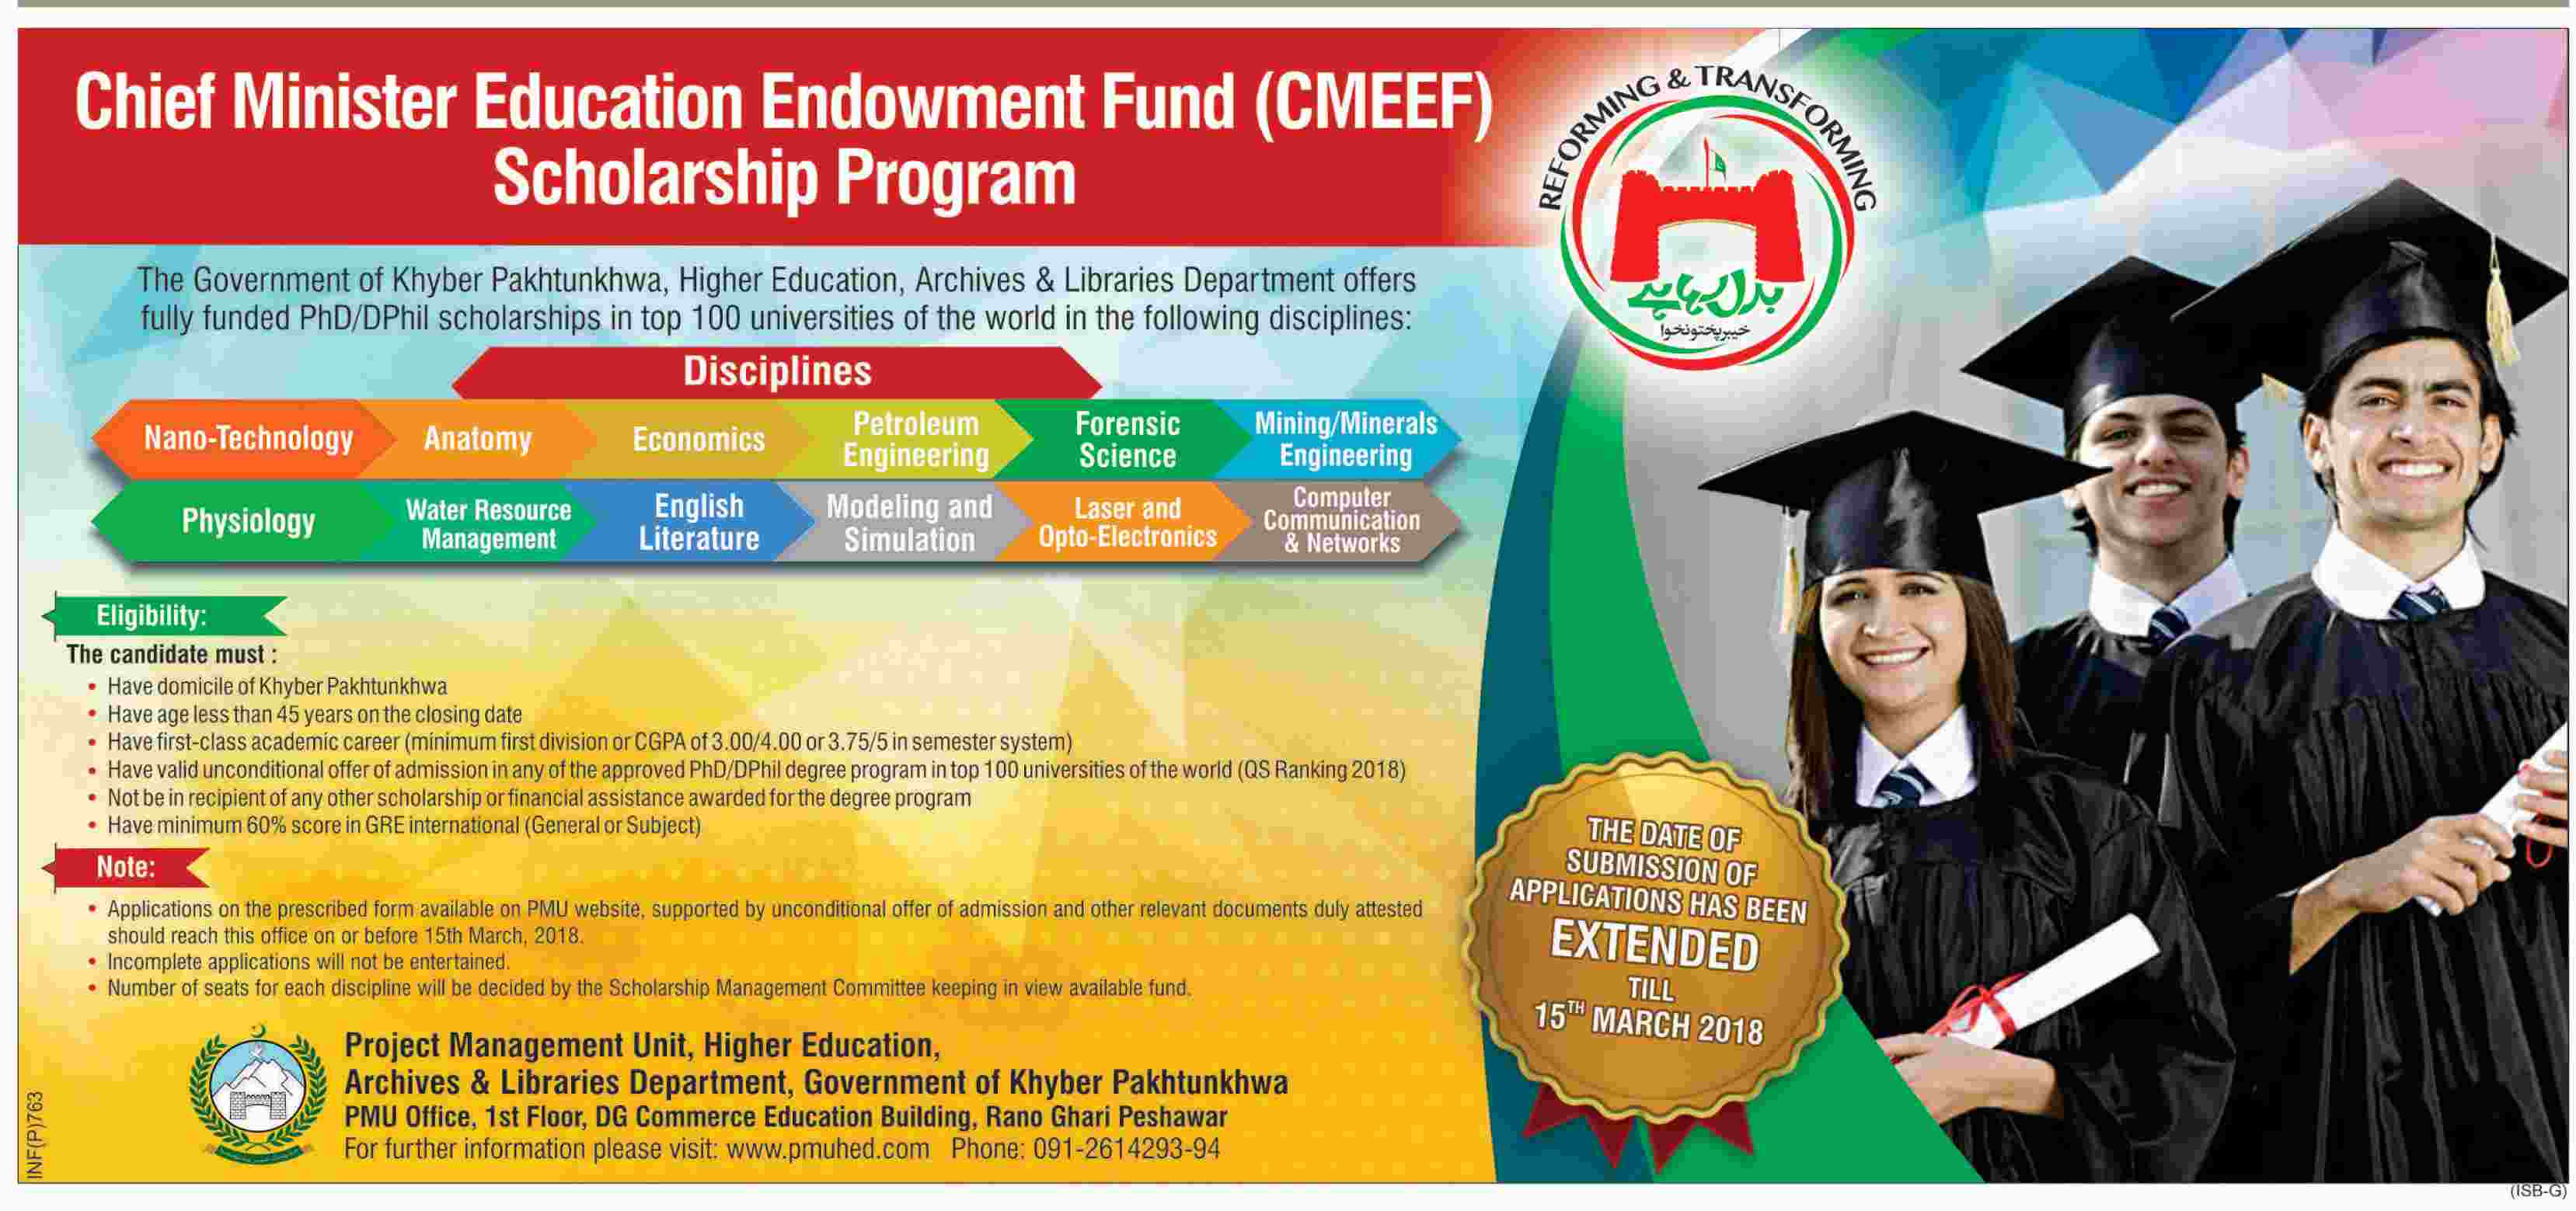 Chief Minister Education Endowment Fund (CMEEF) Scholarship Program - PhD/DPhil 